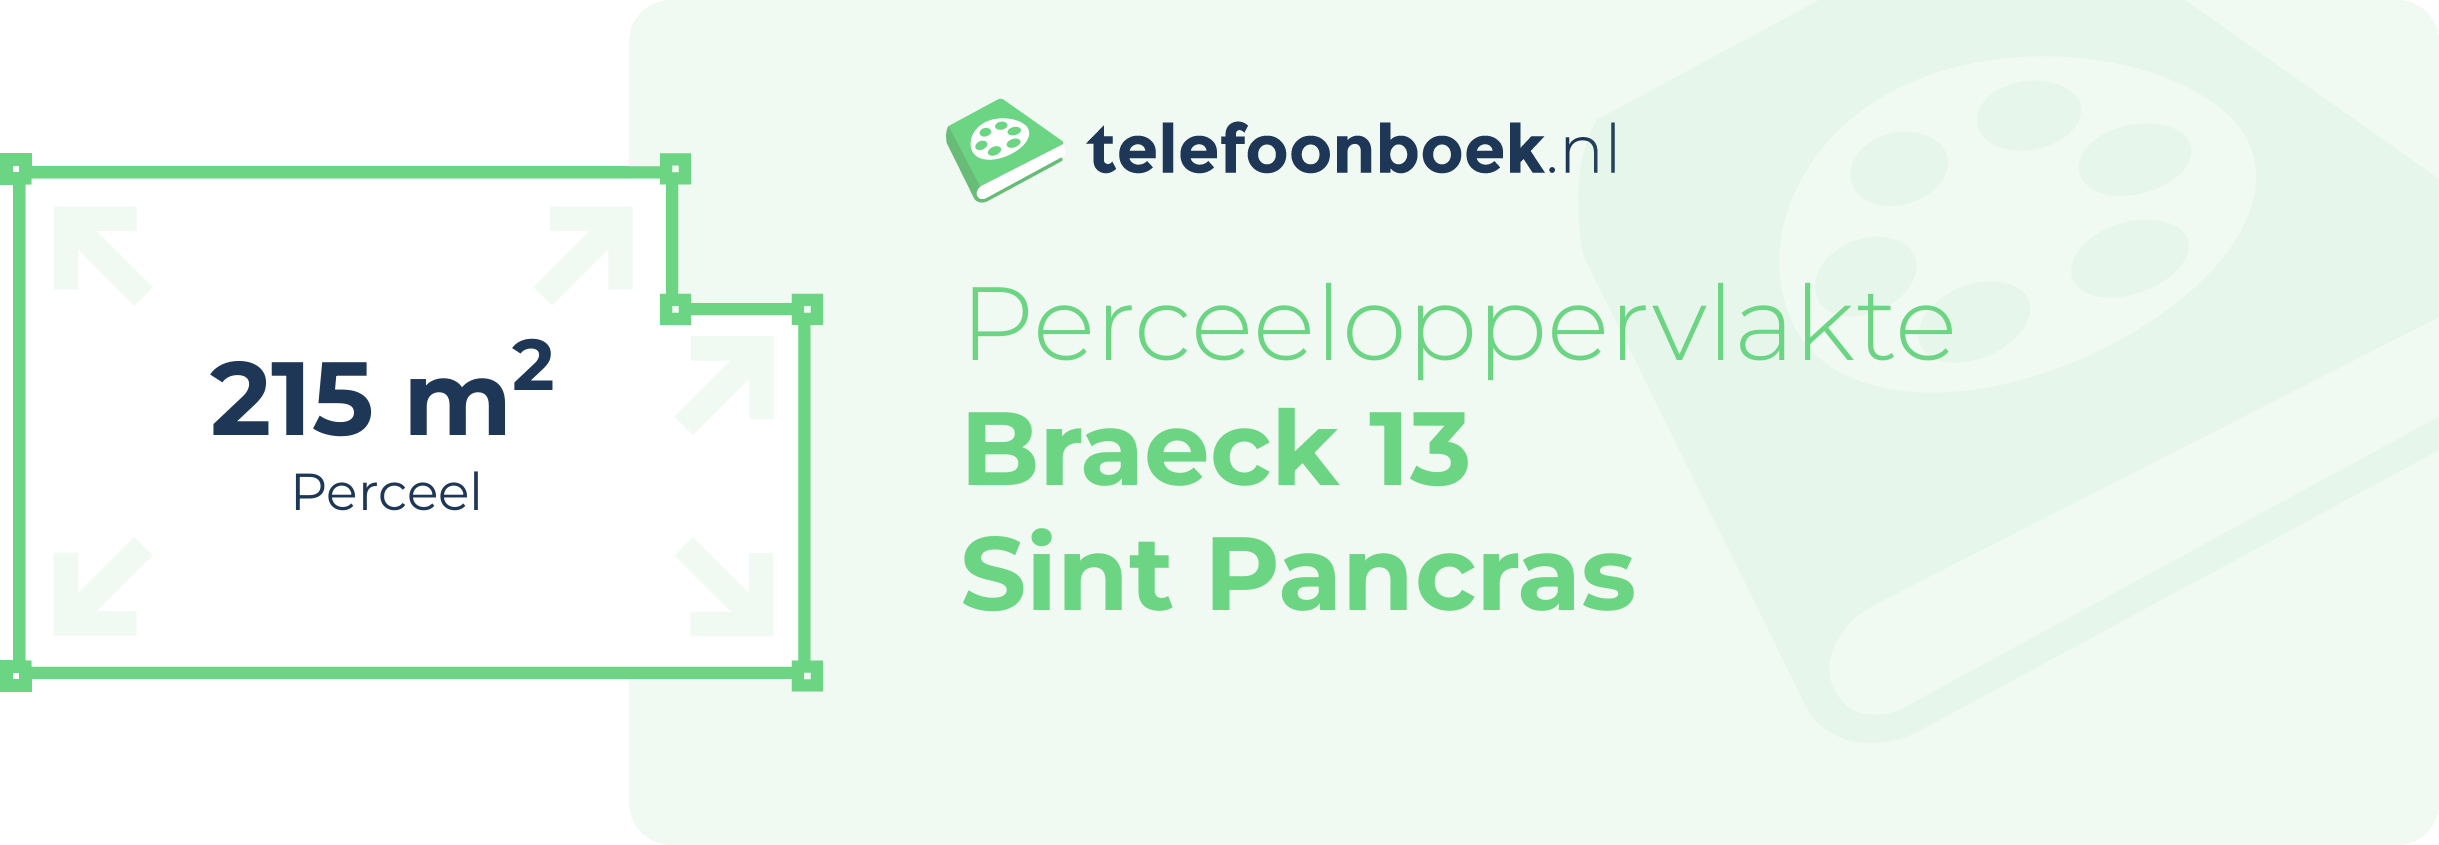 Perceeloppervlakte Braeck 13 Sint Pancras